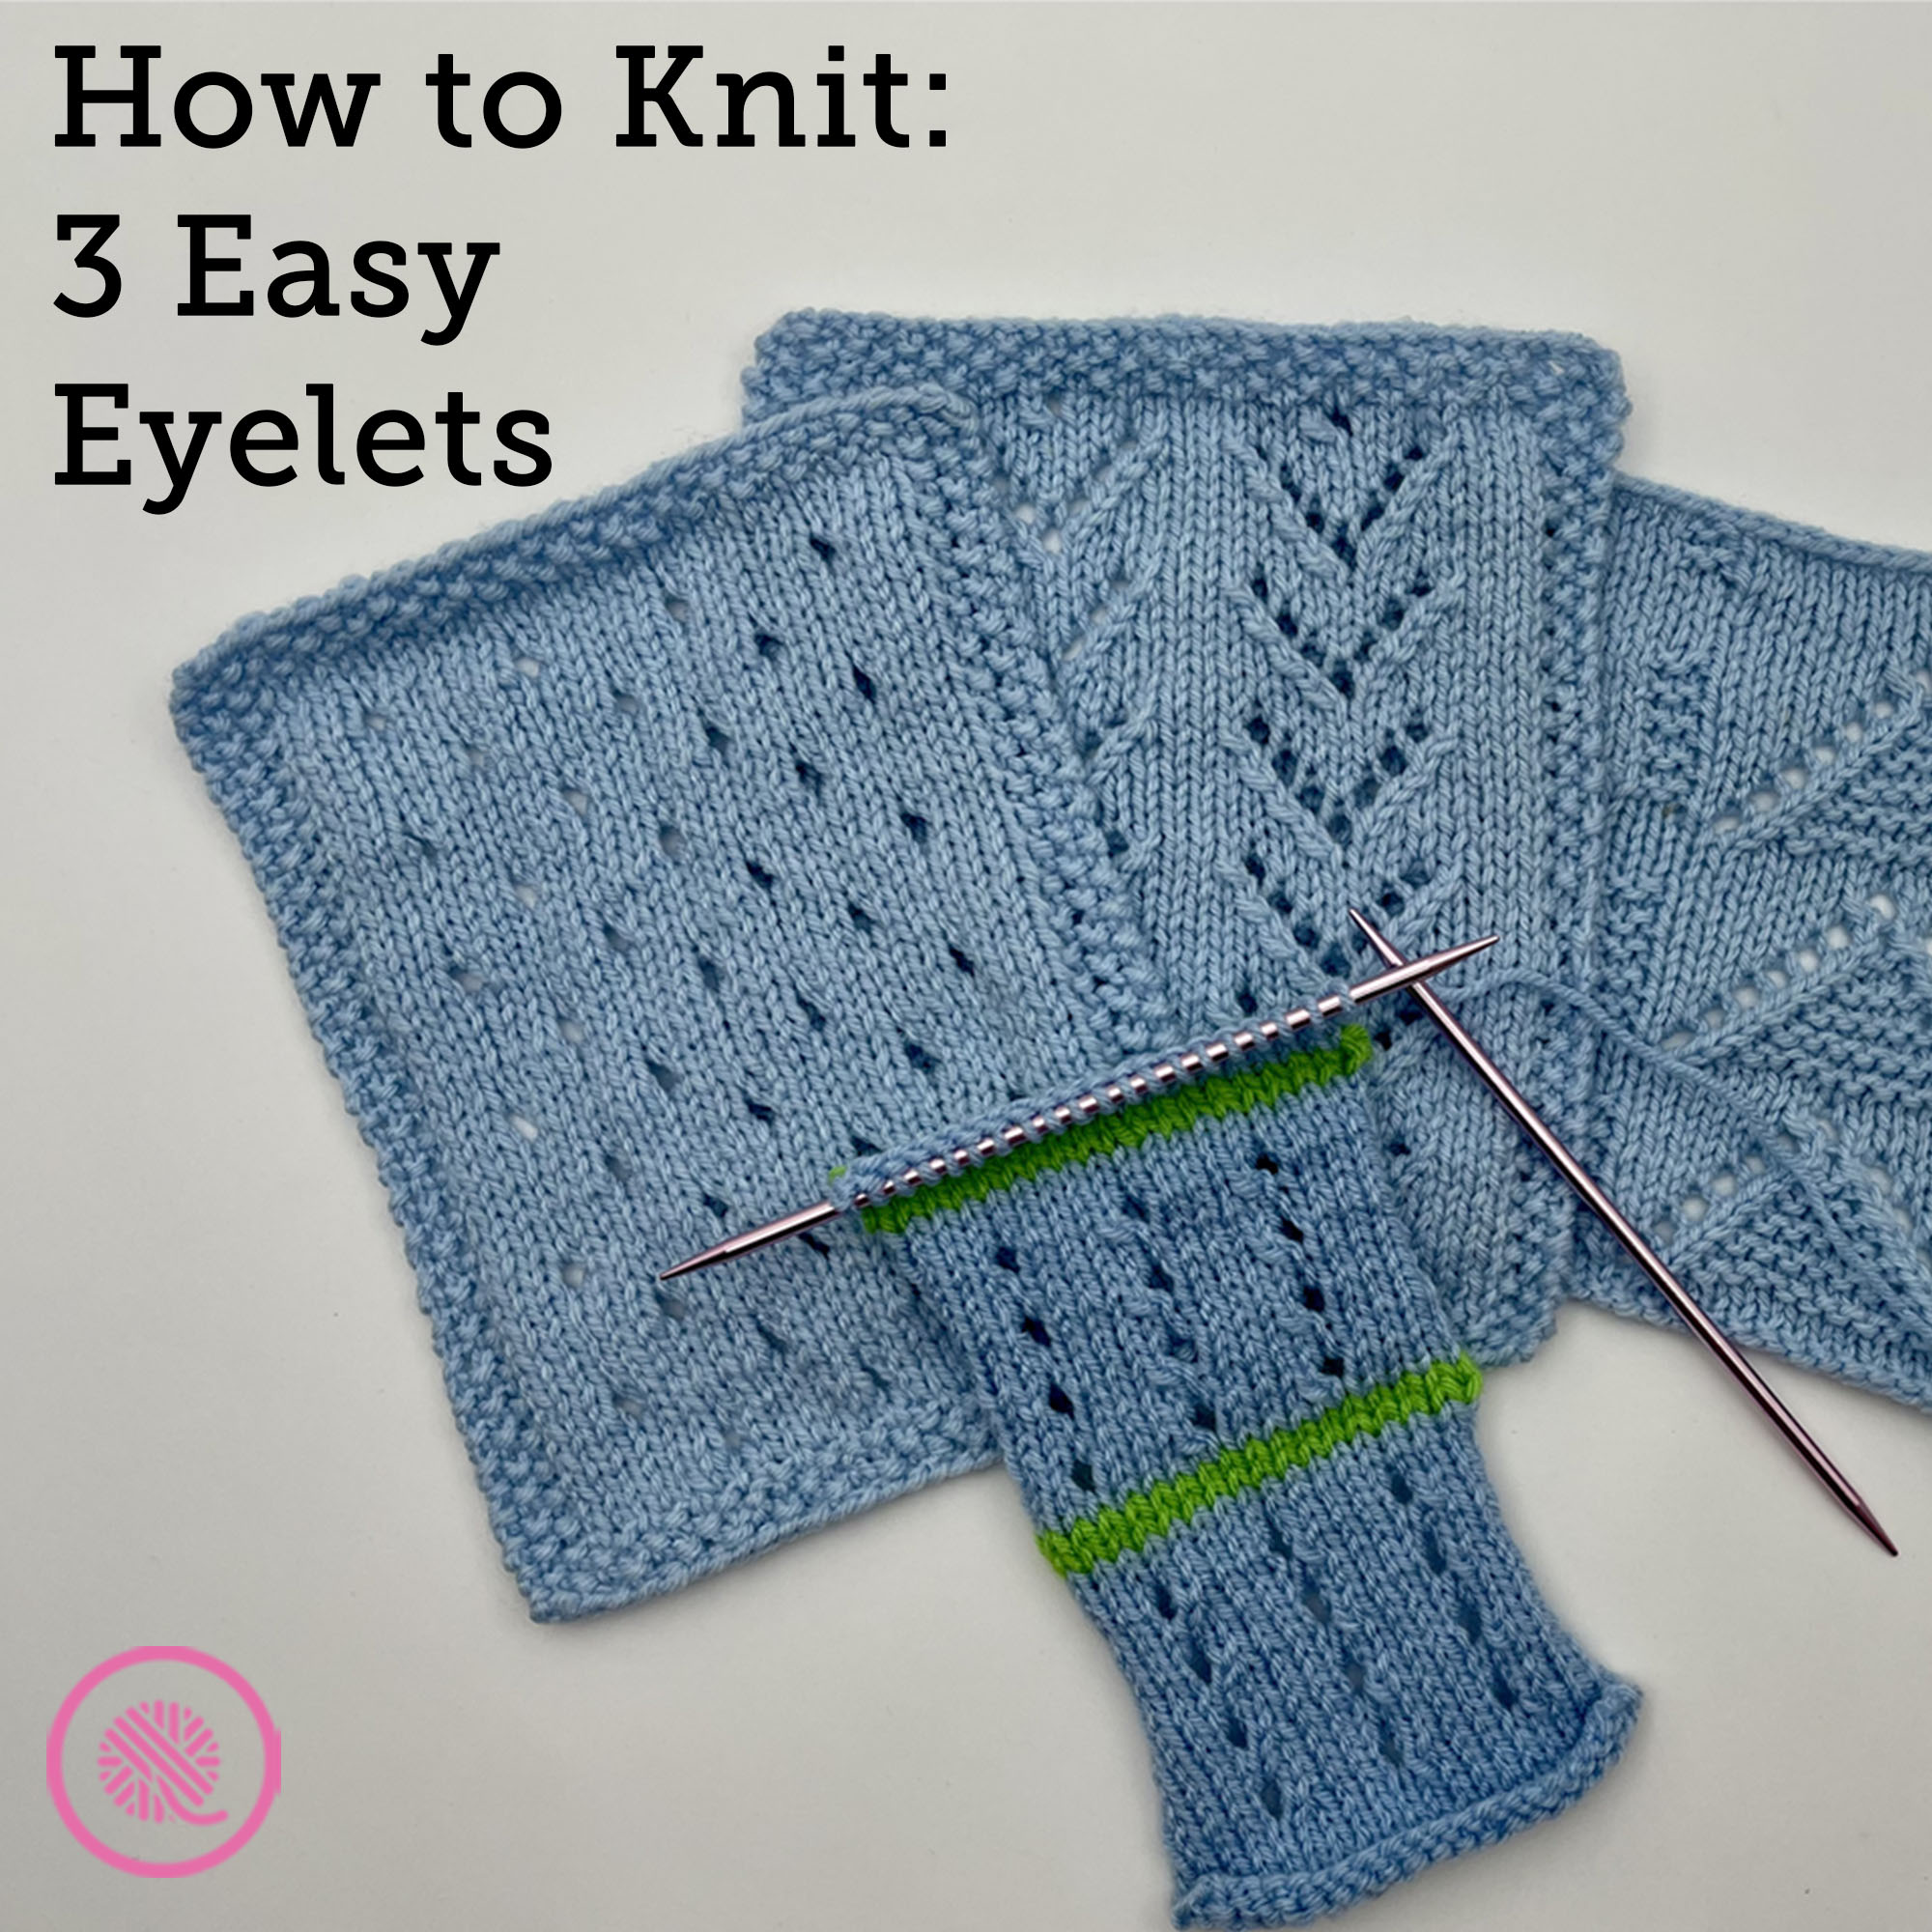 20 Featured Eyelet and Lace Stitches - Knitting Stitches  Lace knitting  stitches, Lace knitting patterns, Knit stitch patterns